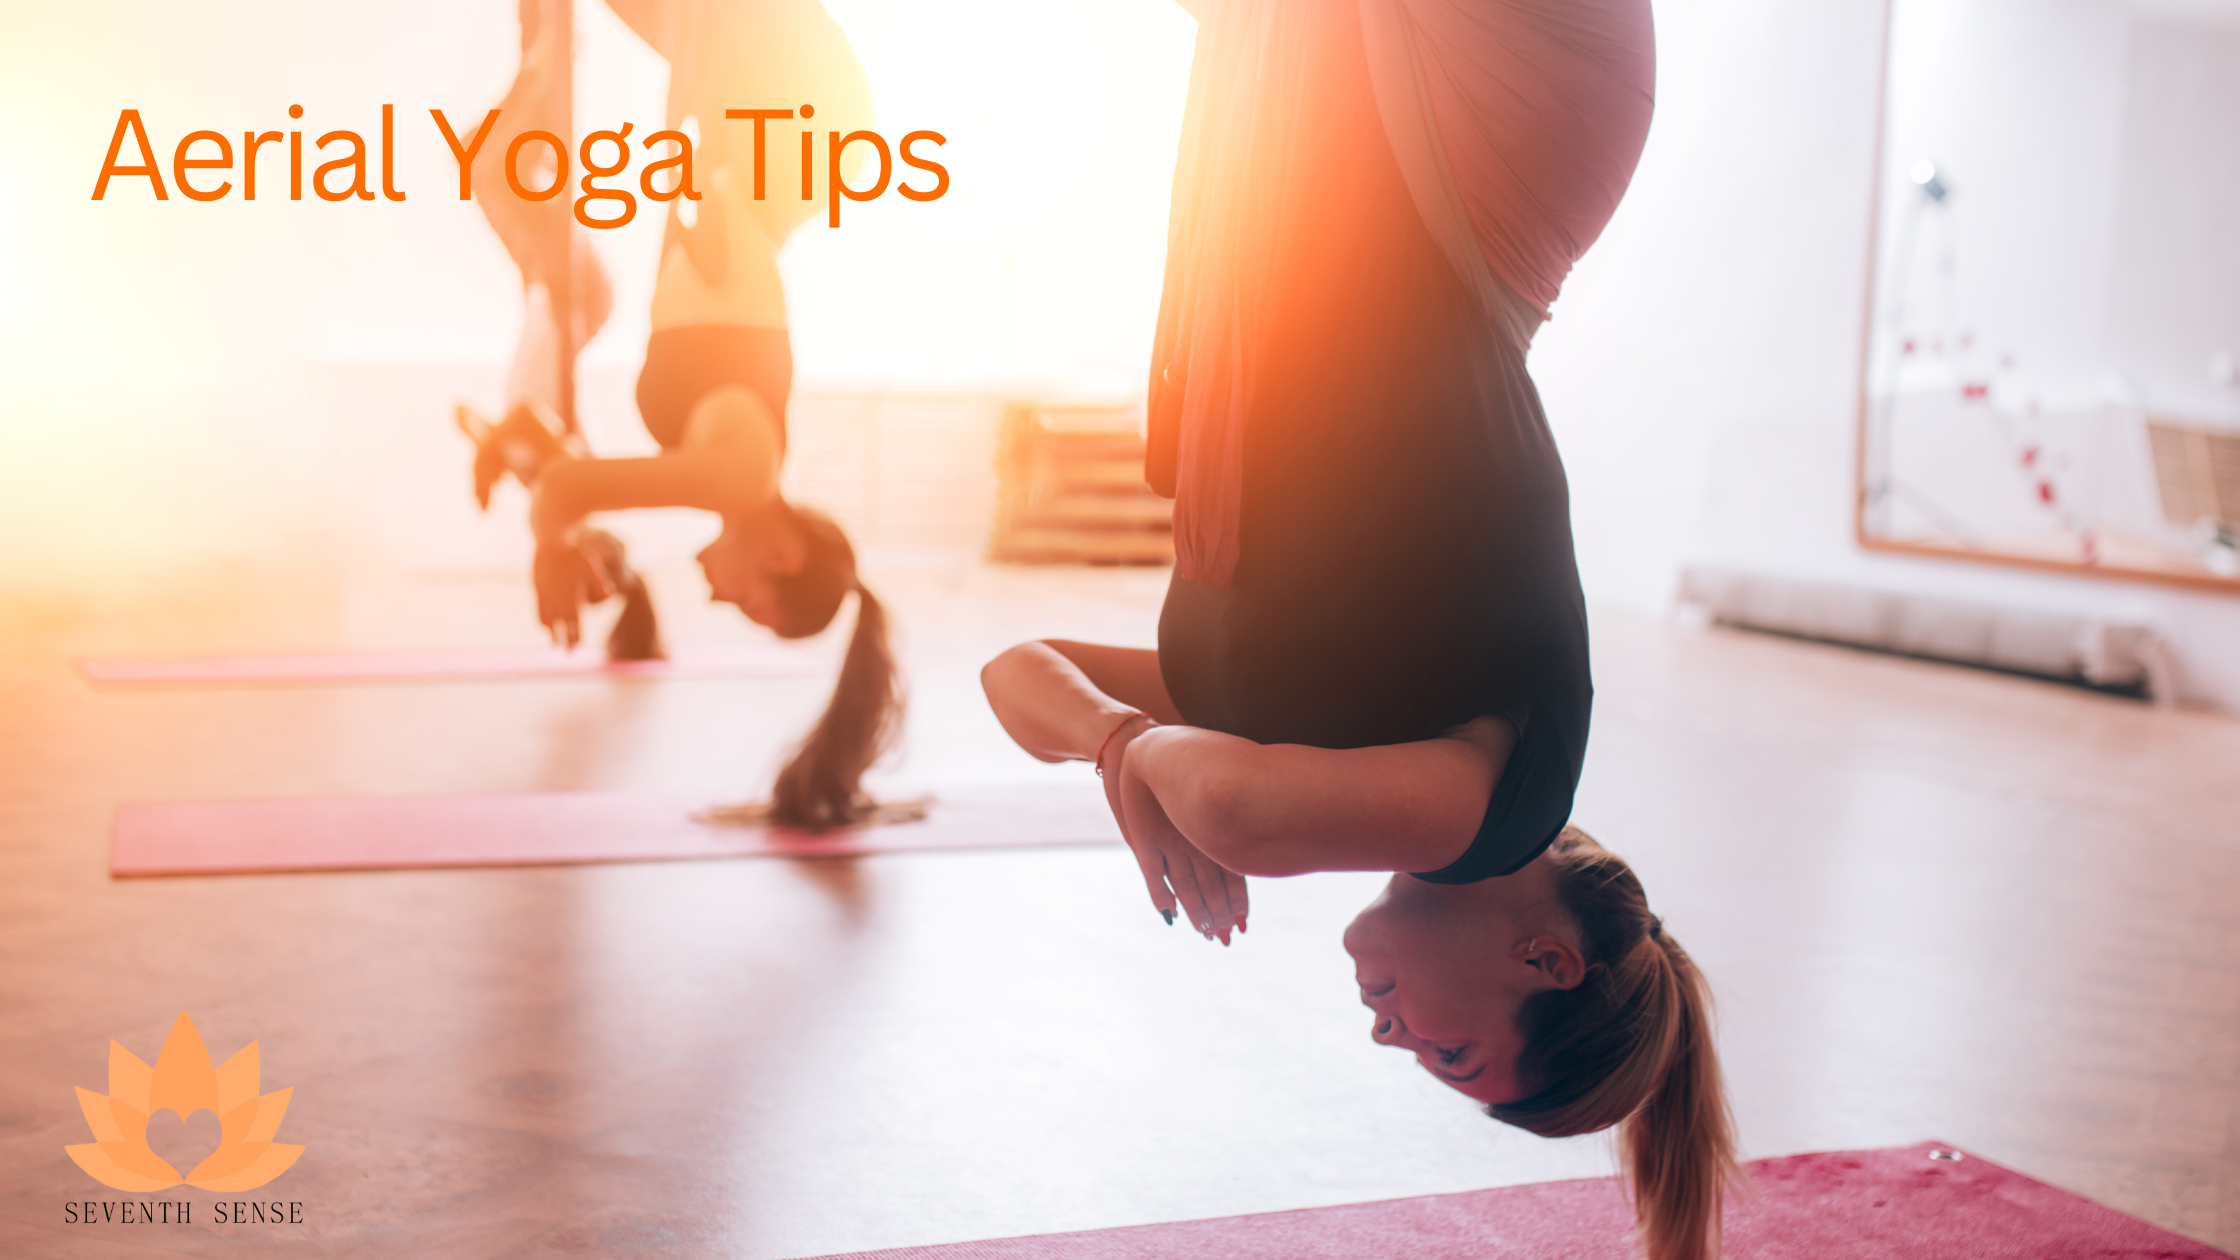 Aerial yoga tips